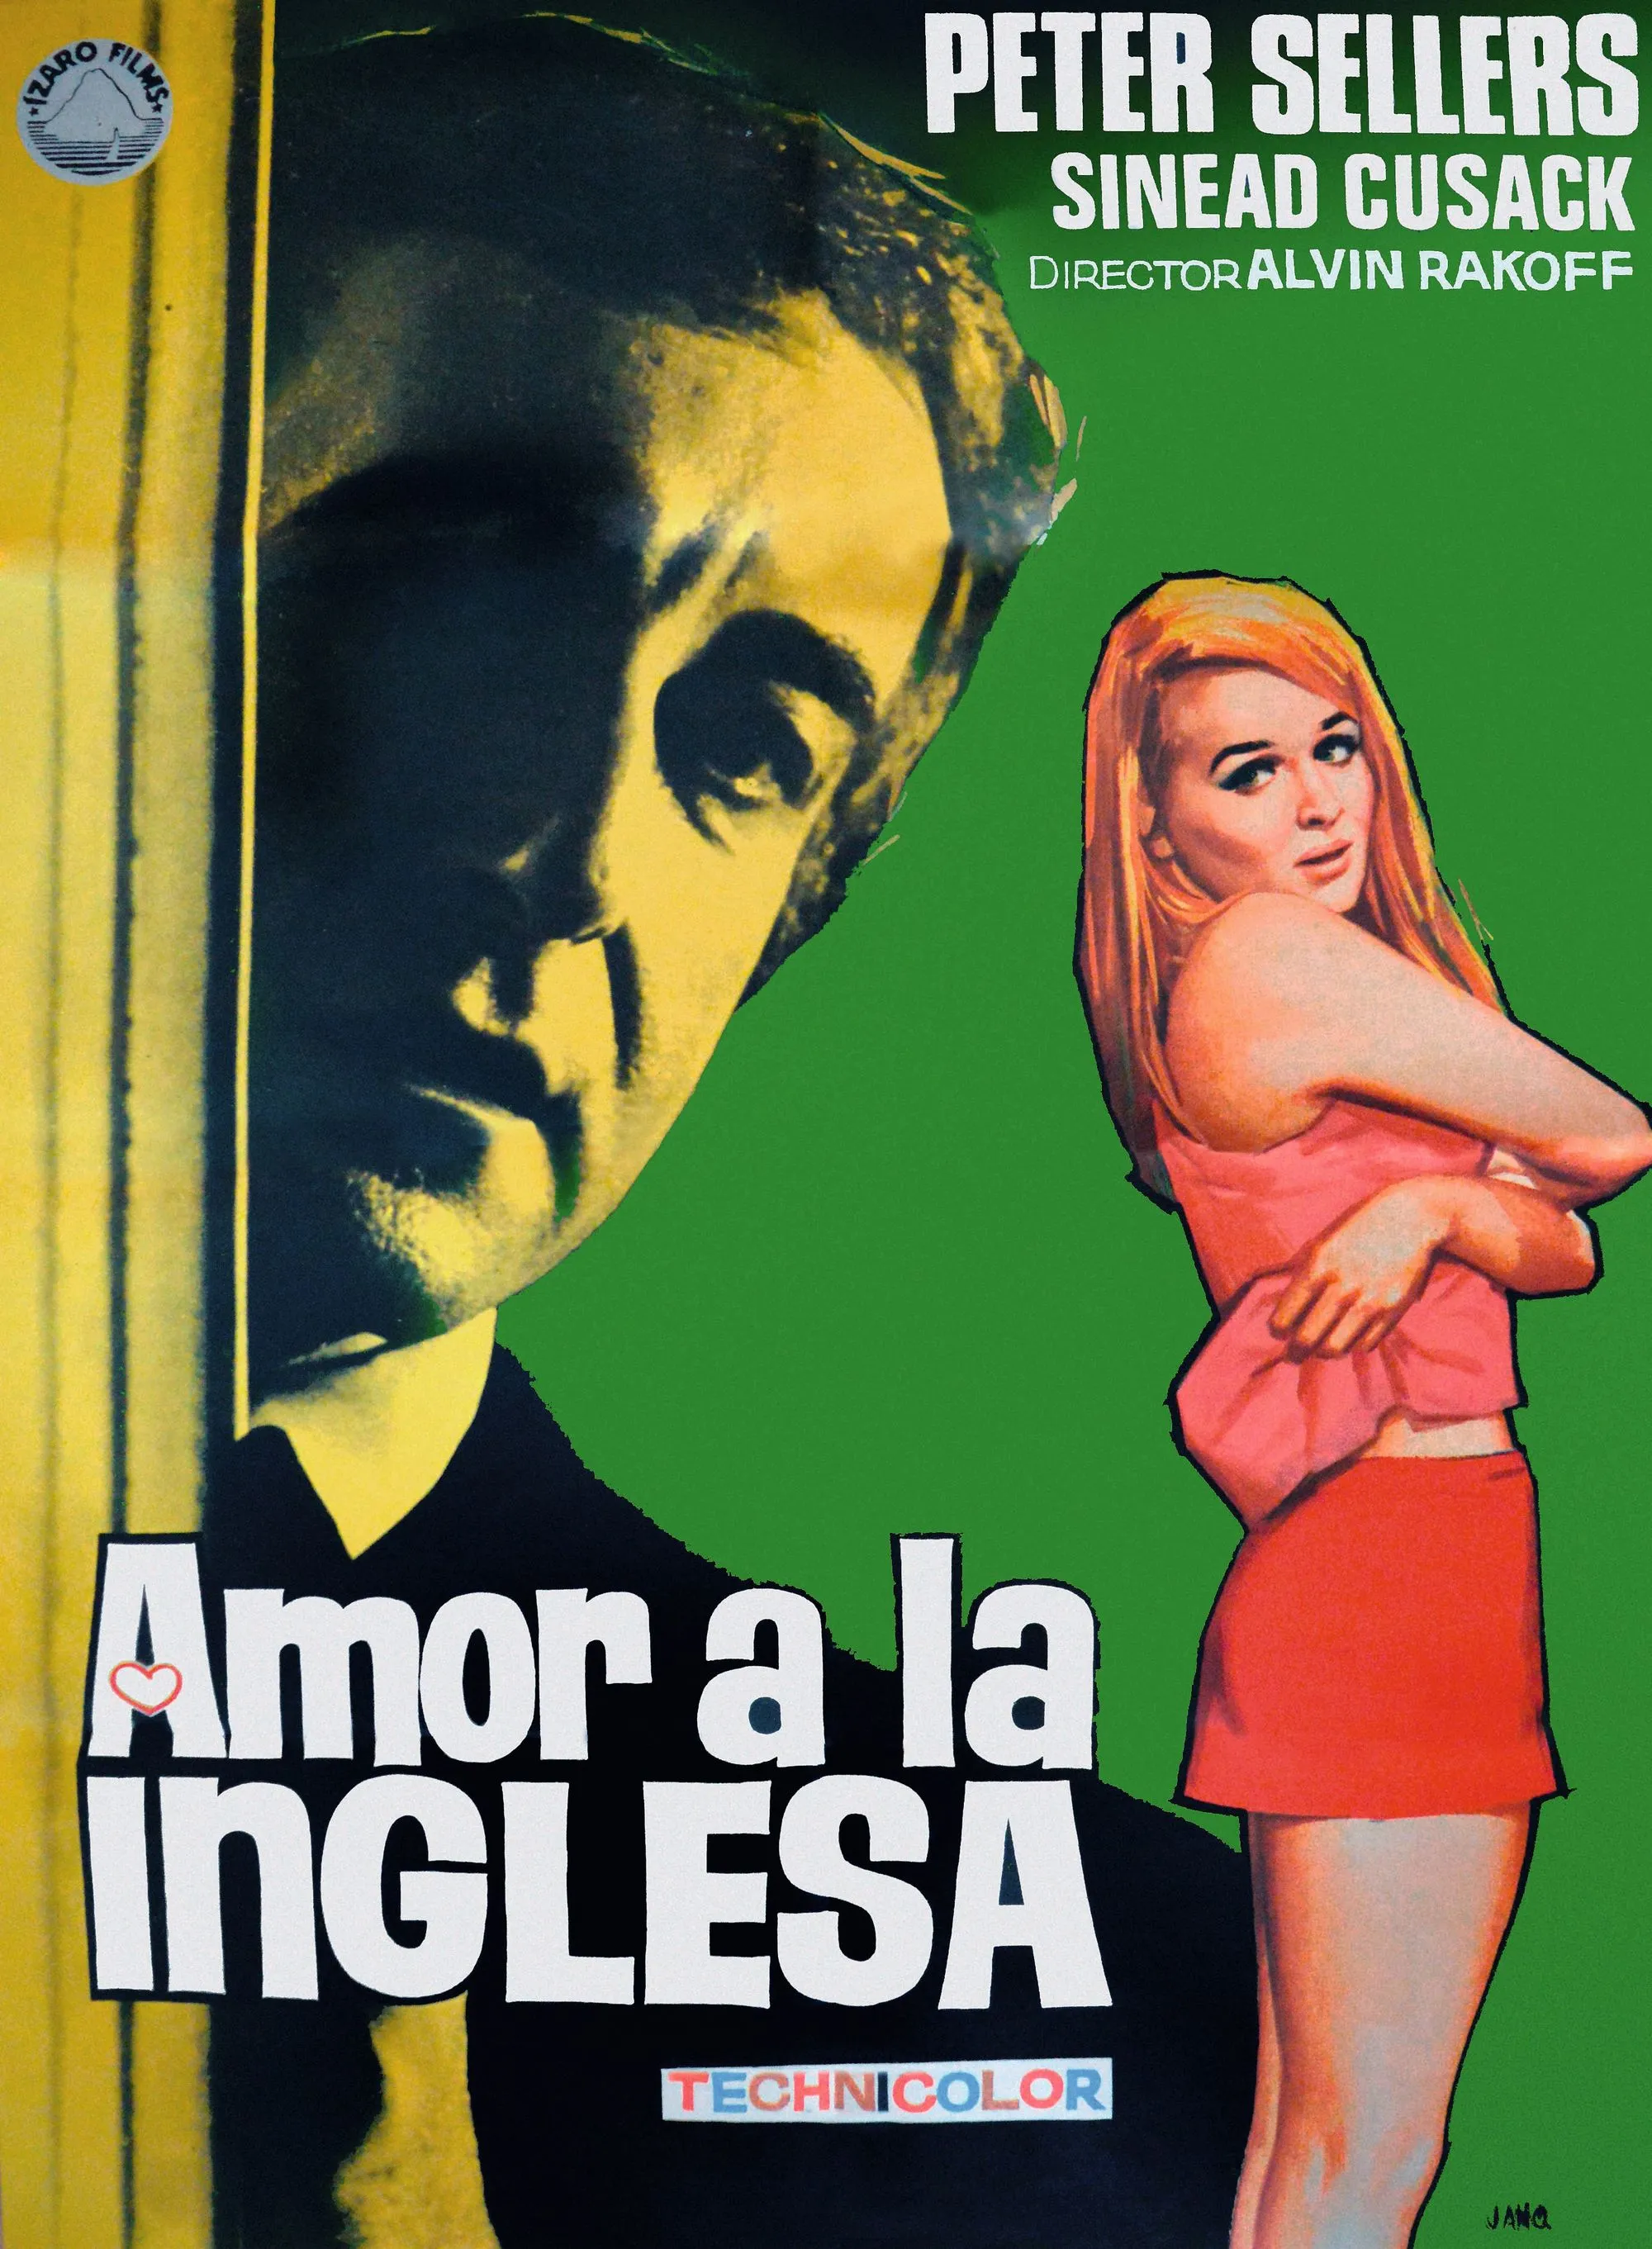 Cartel español para la película Amor a la inglesa,  Alvin Rakoff, 1970.